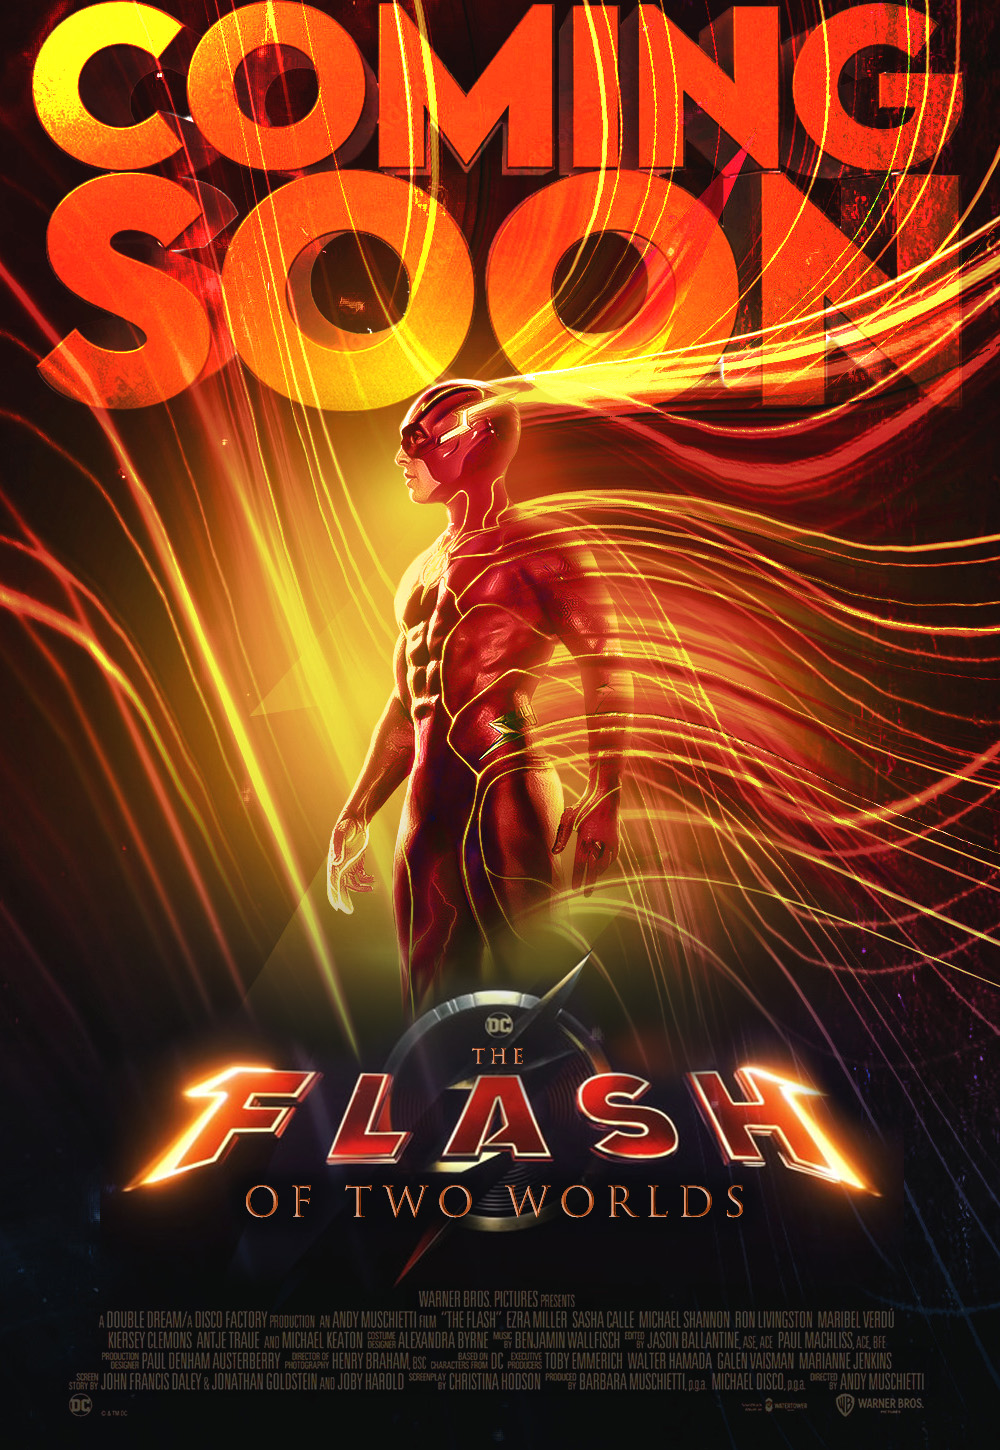 The-Flash-Poster-v2-copy.jpg